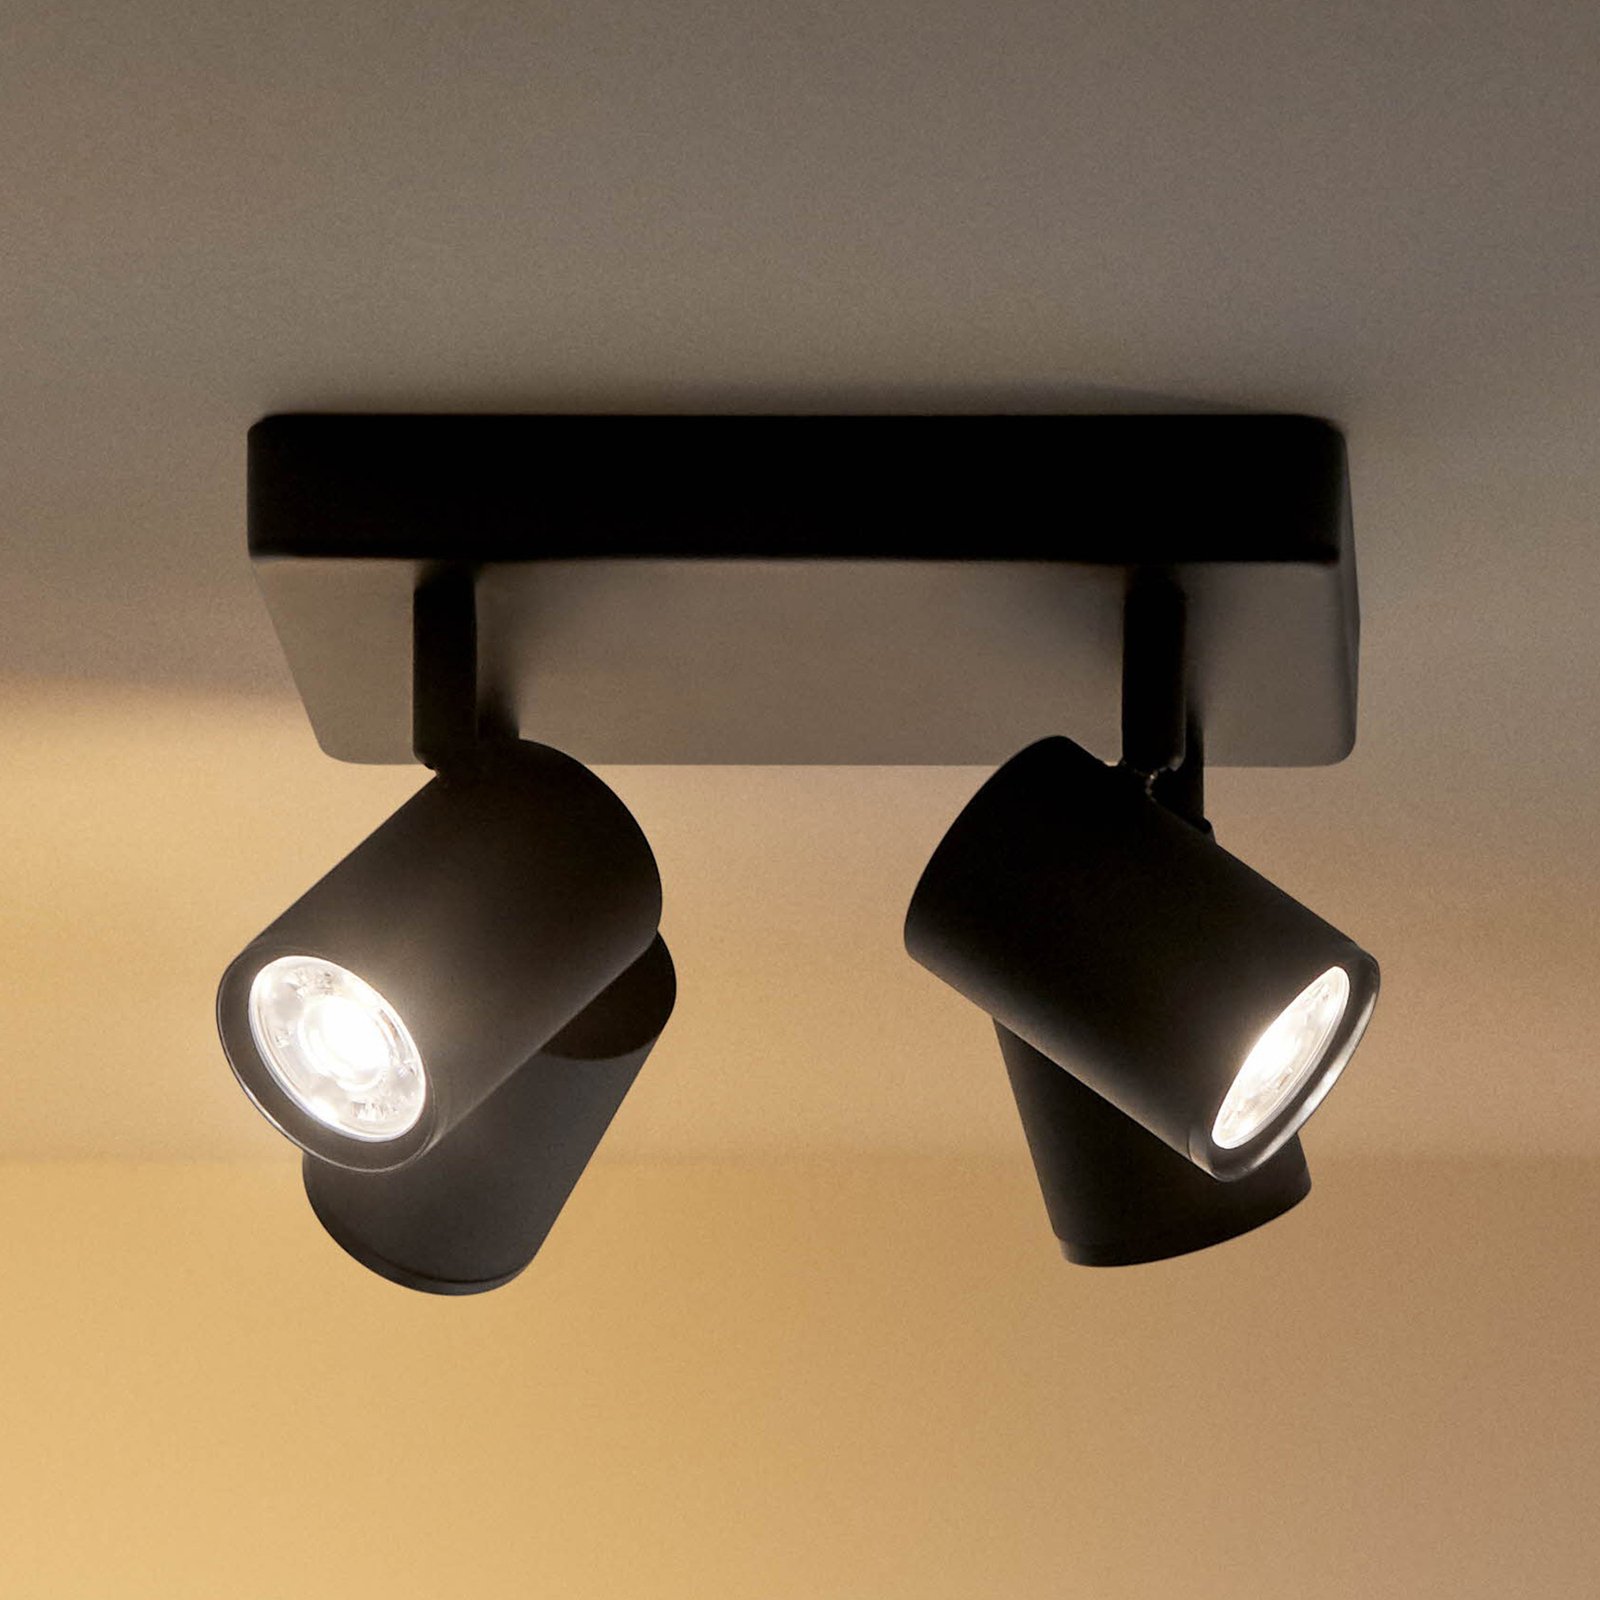 WiZ spot plafond LED Imageo, 4 lampes noir